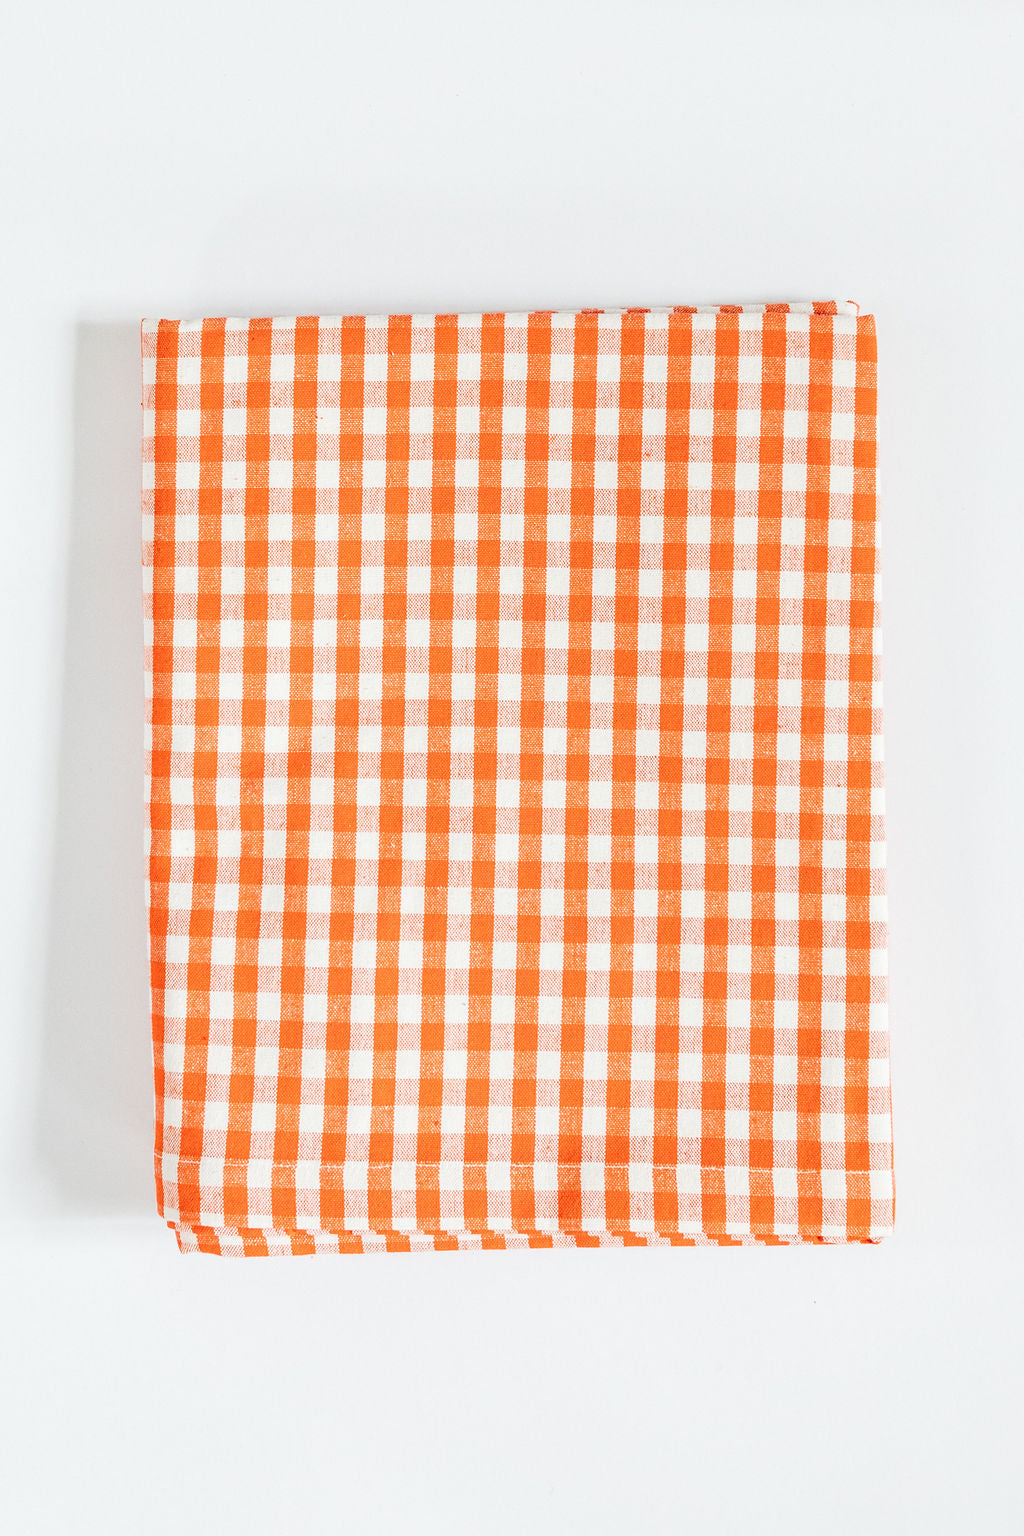 Gingham Check Orange Table Cloth